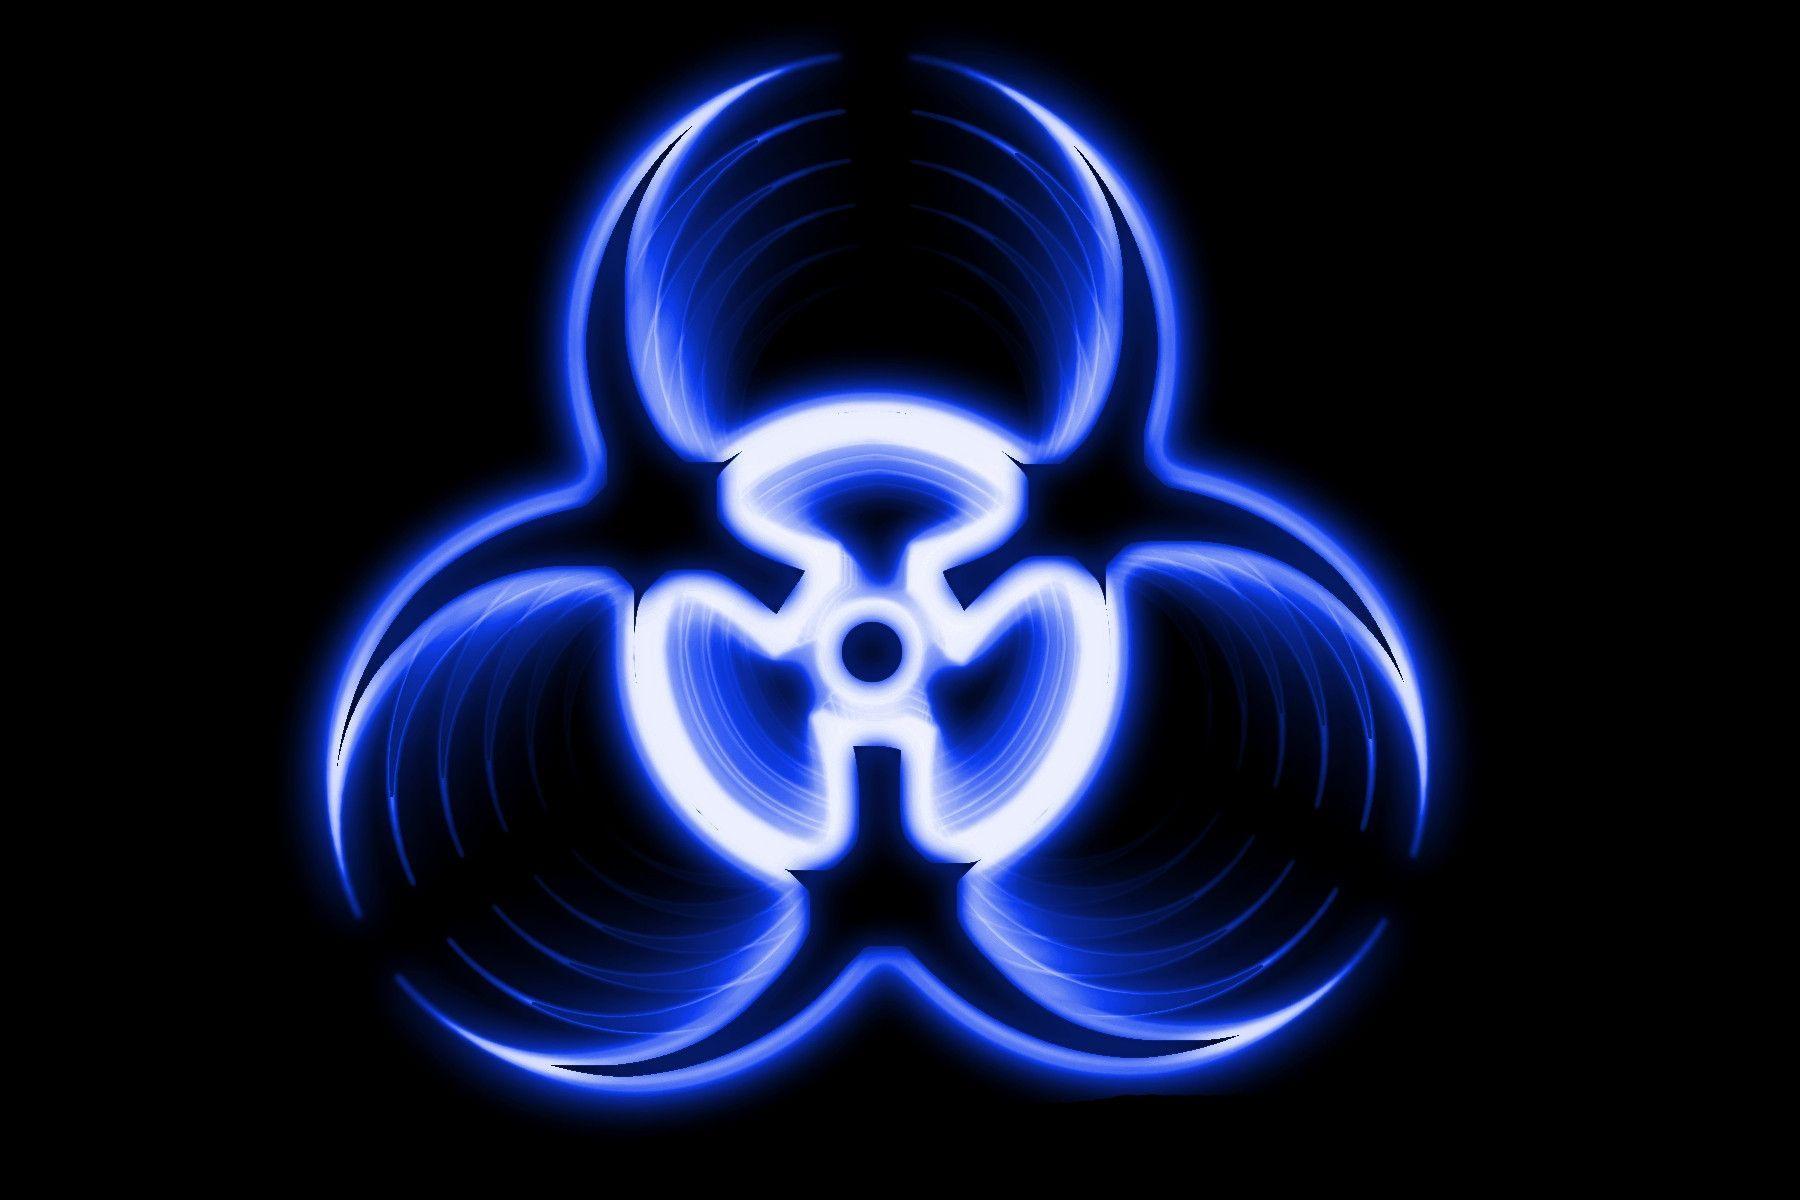 Wallpaper For > Biohazard Symbol Wallpaper Blue